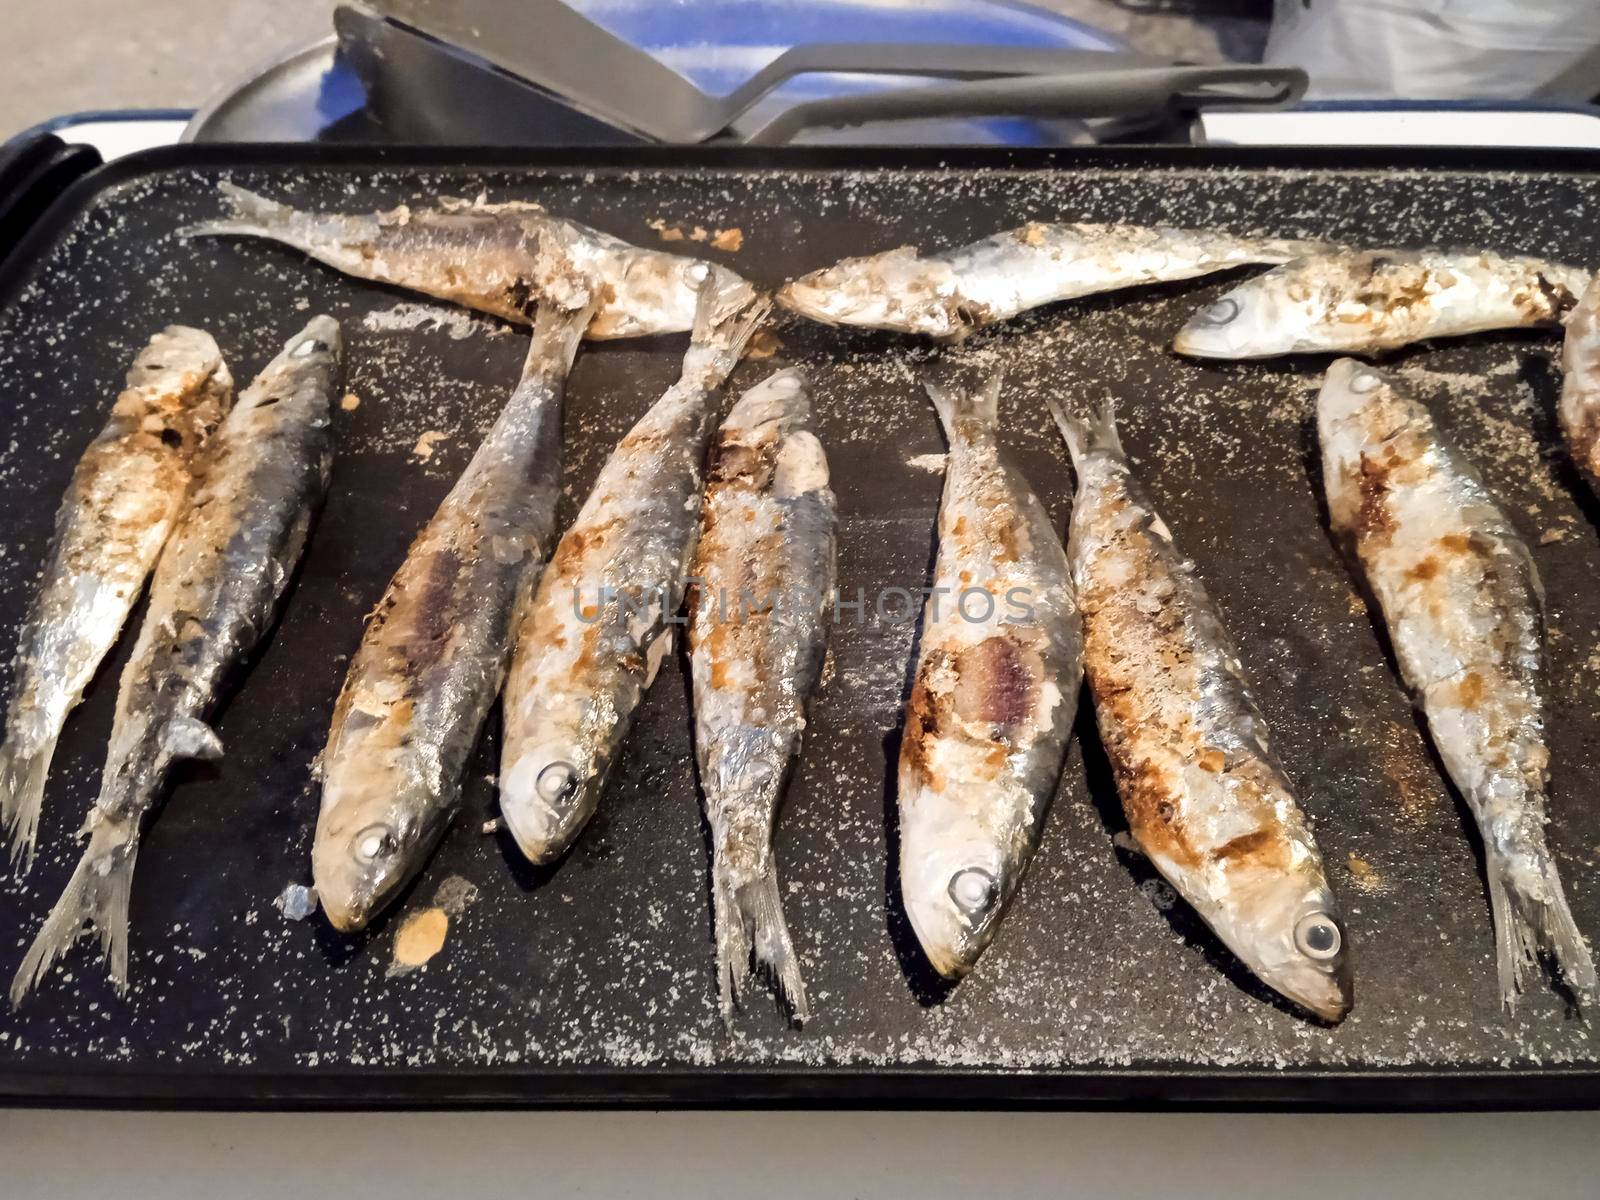 Grilled sardines in summer in Spain by soniabonet